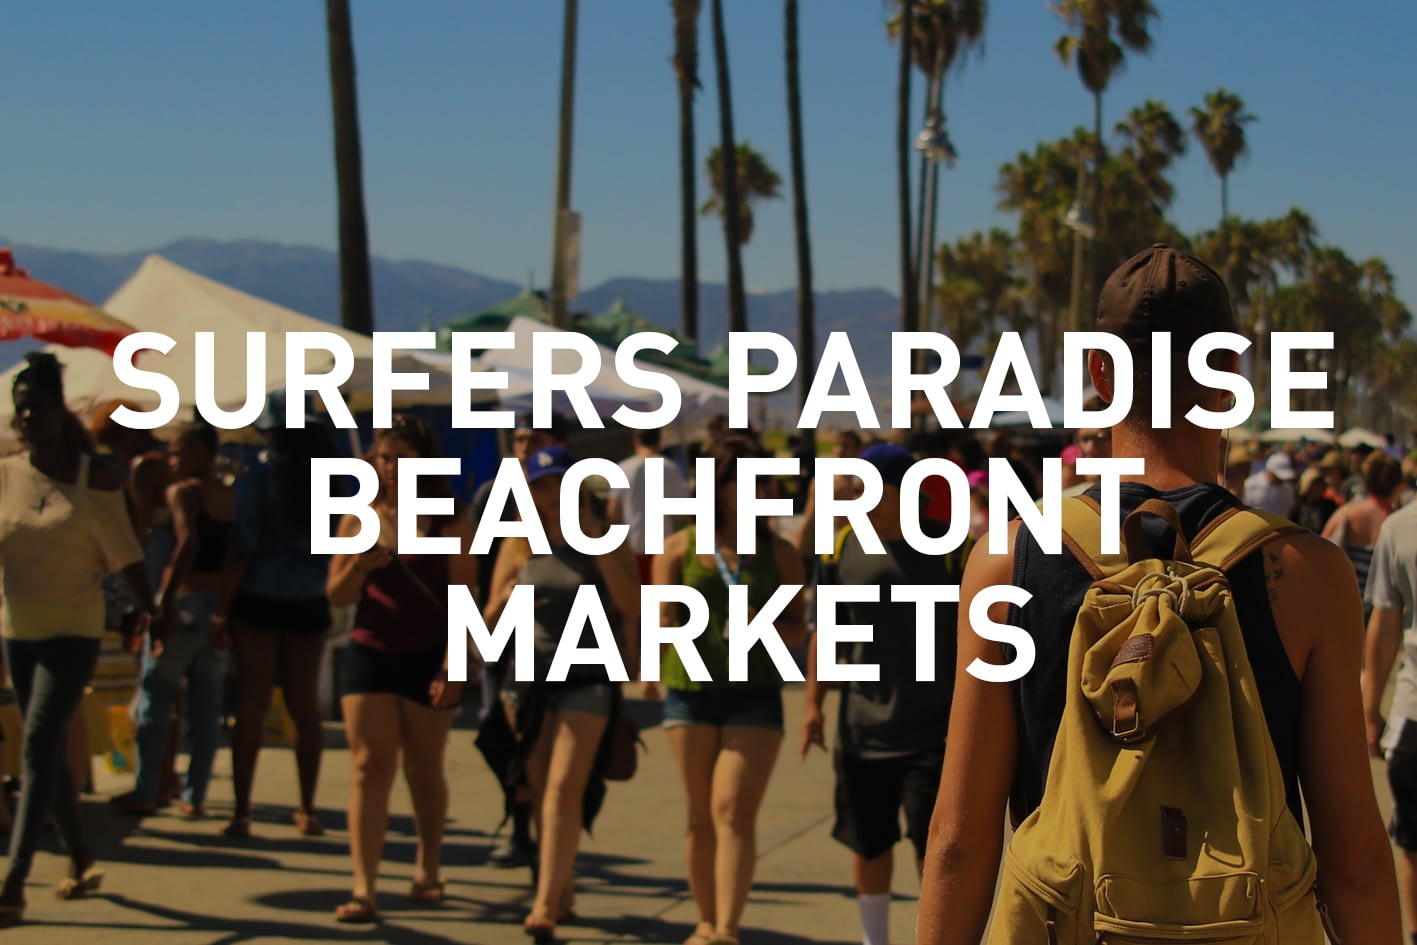 Surfers Paradise Beachfront Markets